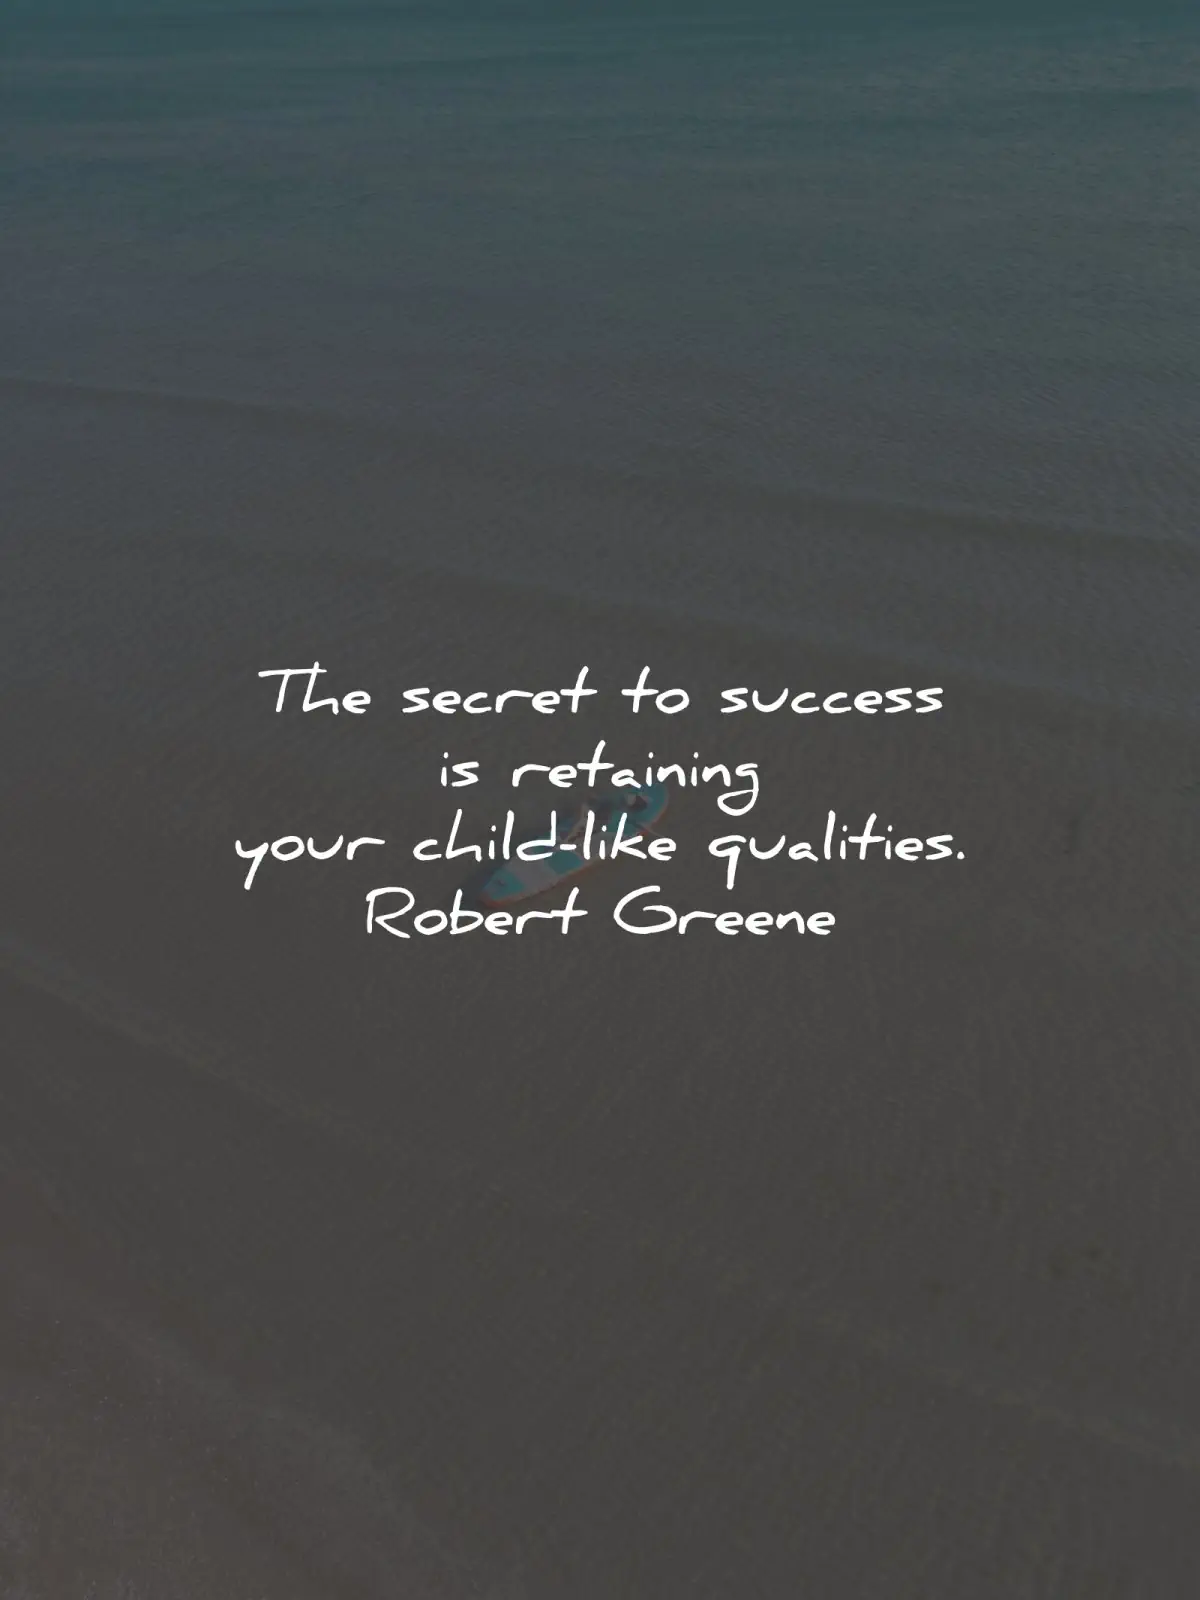 robert greene quotes secret success retaining child like qualities wisdom